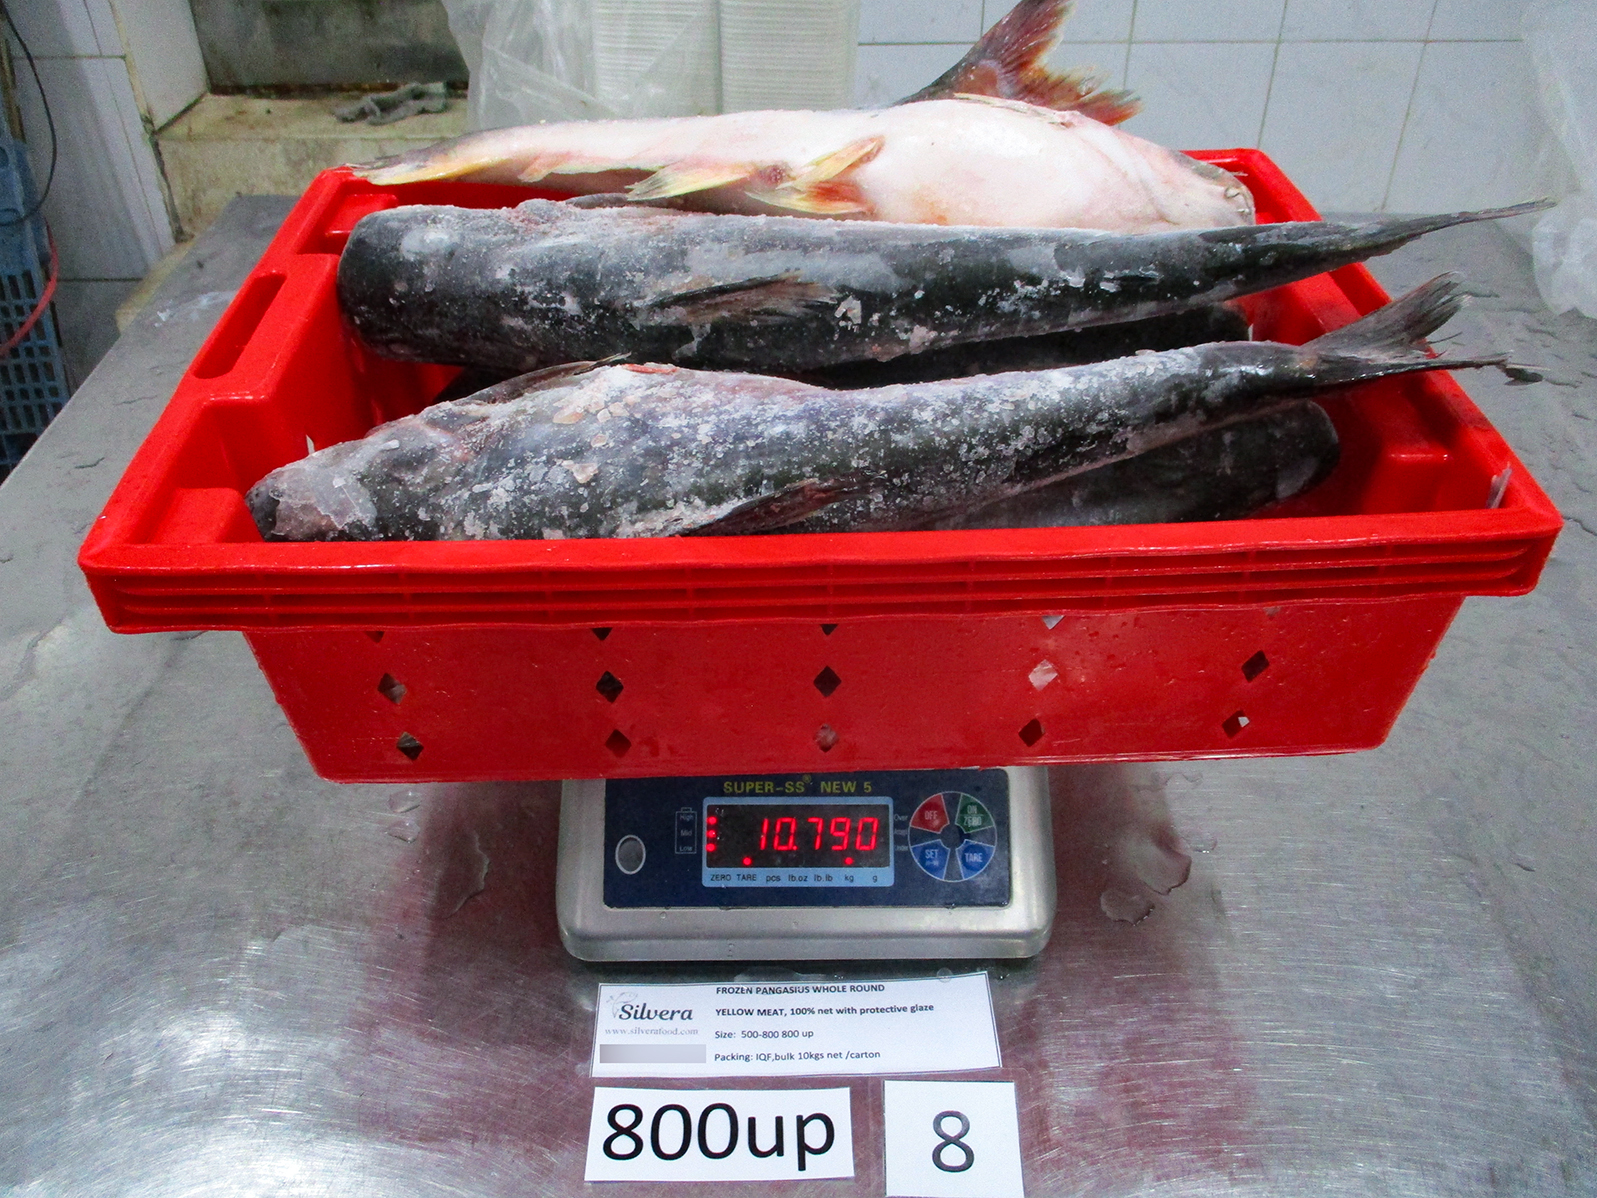 Frozen whole round pangasius fish